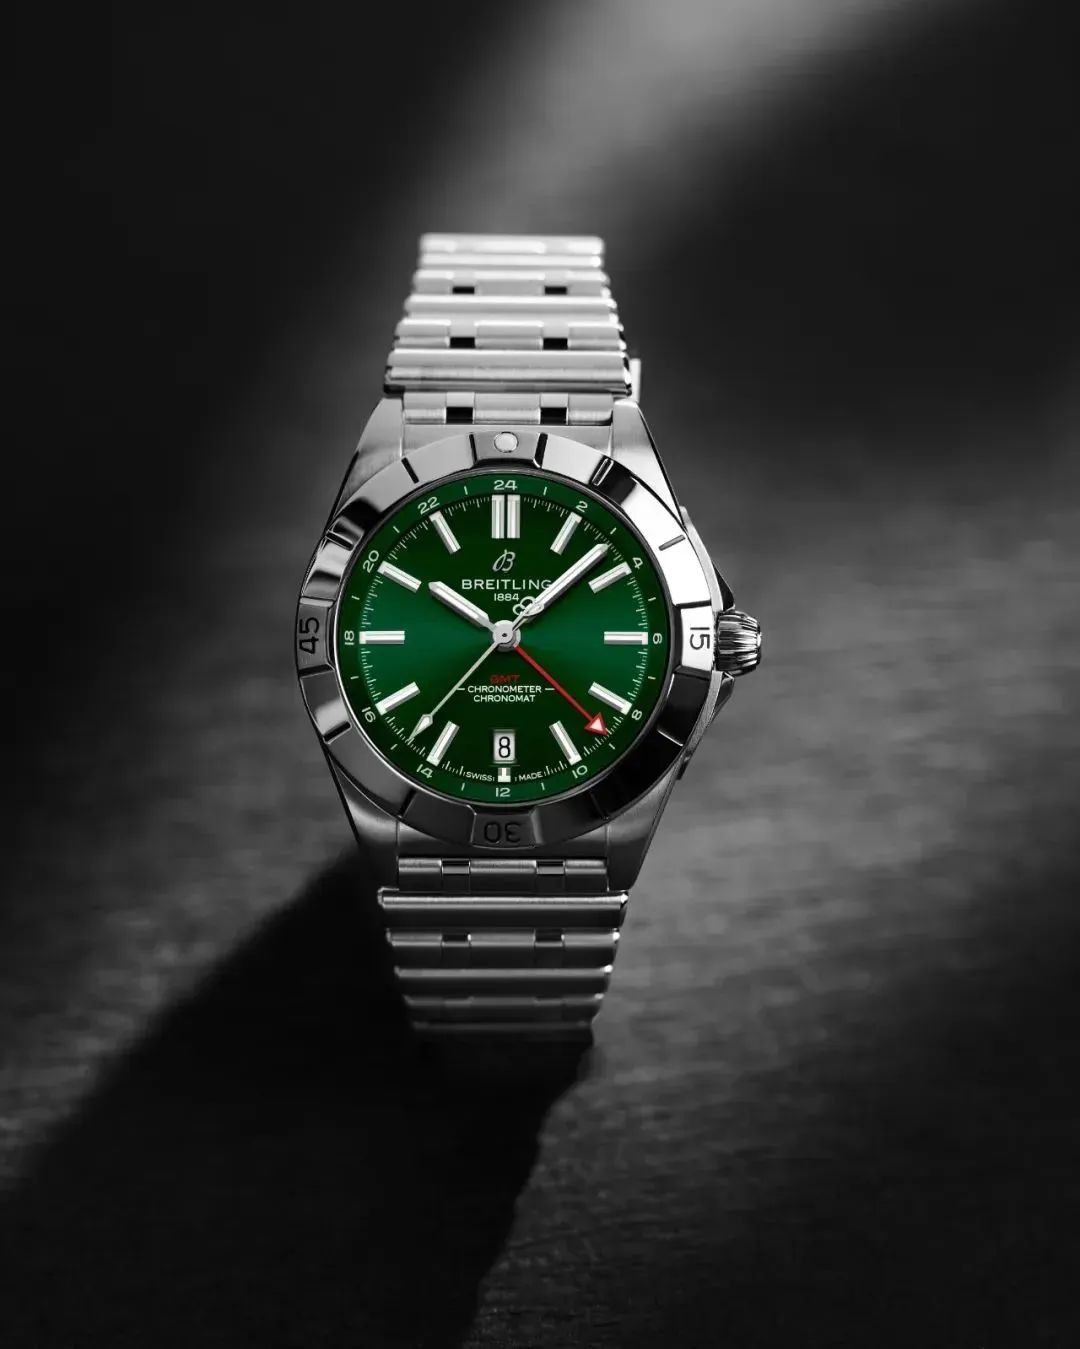 Breitling replica watch model 16